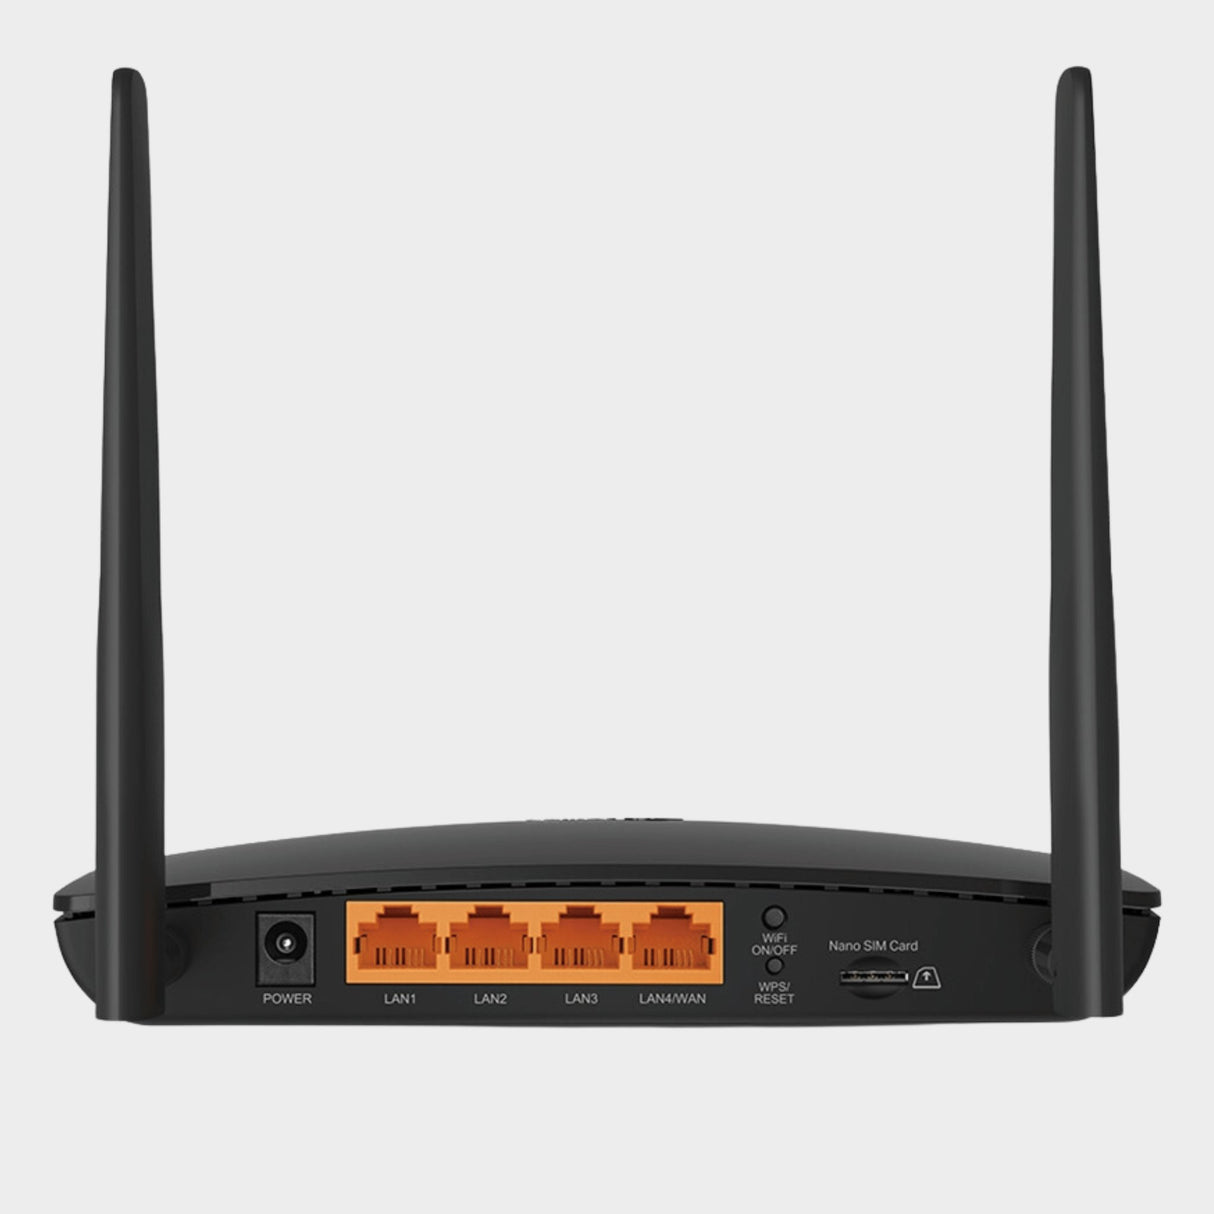 TP-Link 300Mbps Wireless N 4G LTE Router, TL-MR6400 - Black  - KWT Tech Mart